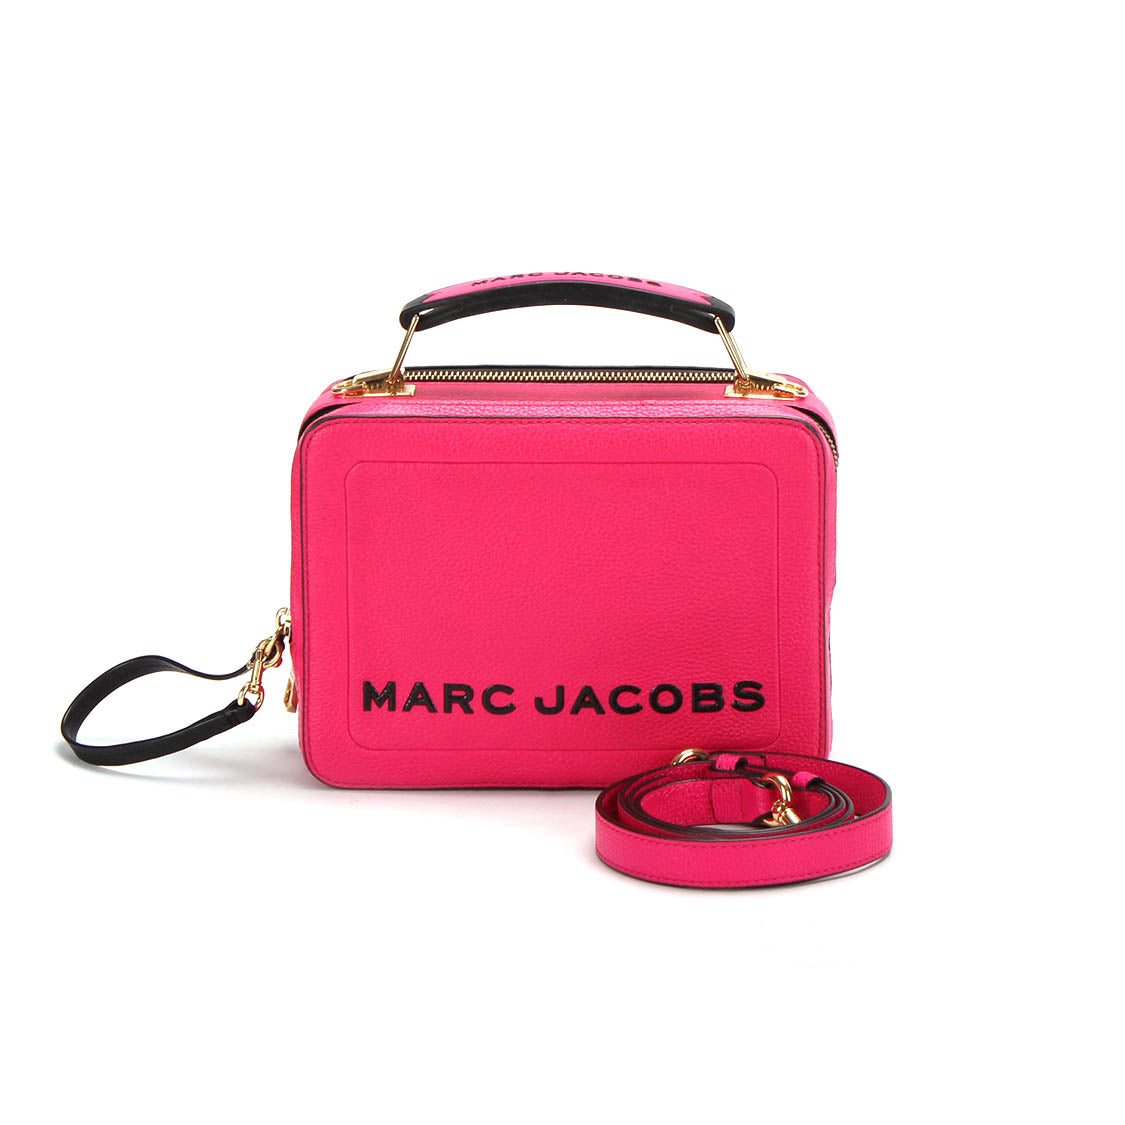 Marc Jacobs  Leather Shoulder Bag PSL1149 in Excellent condition